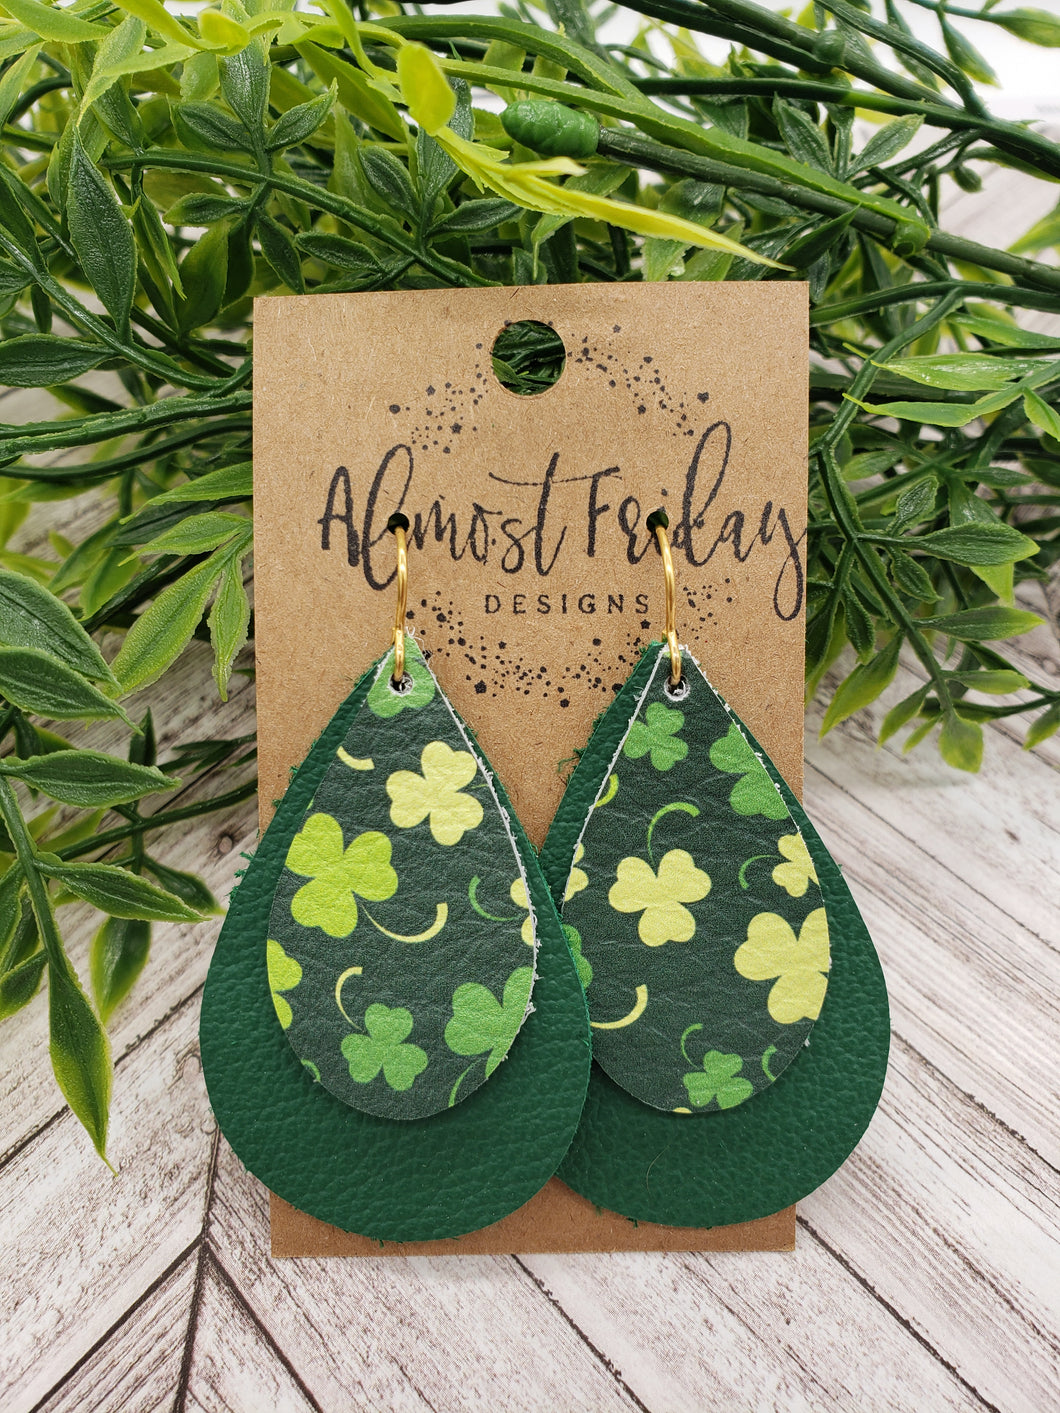 Genuine Leather Earrings - Saint Patrick's Day - Green Earrings - Clovers - Teardrop - Shamrocks - Layered Design